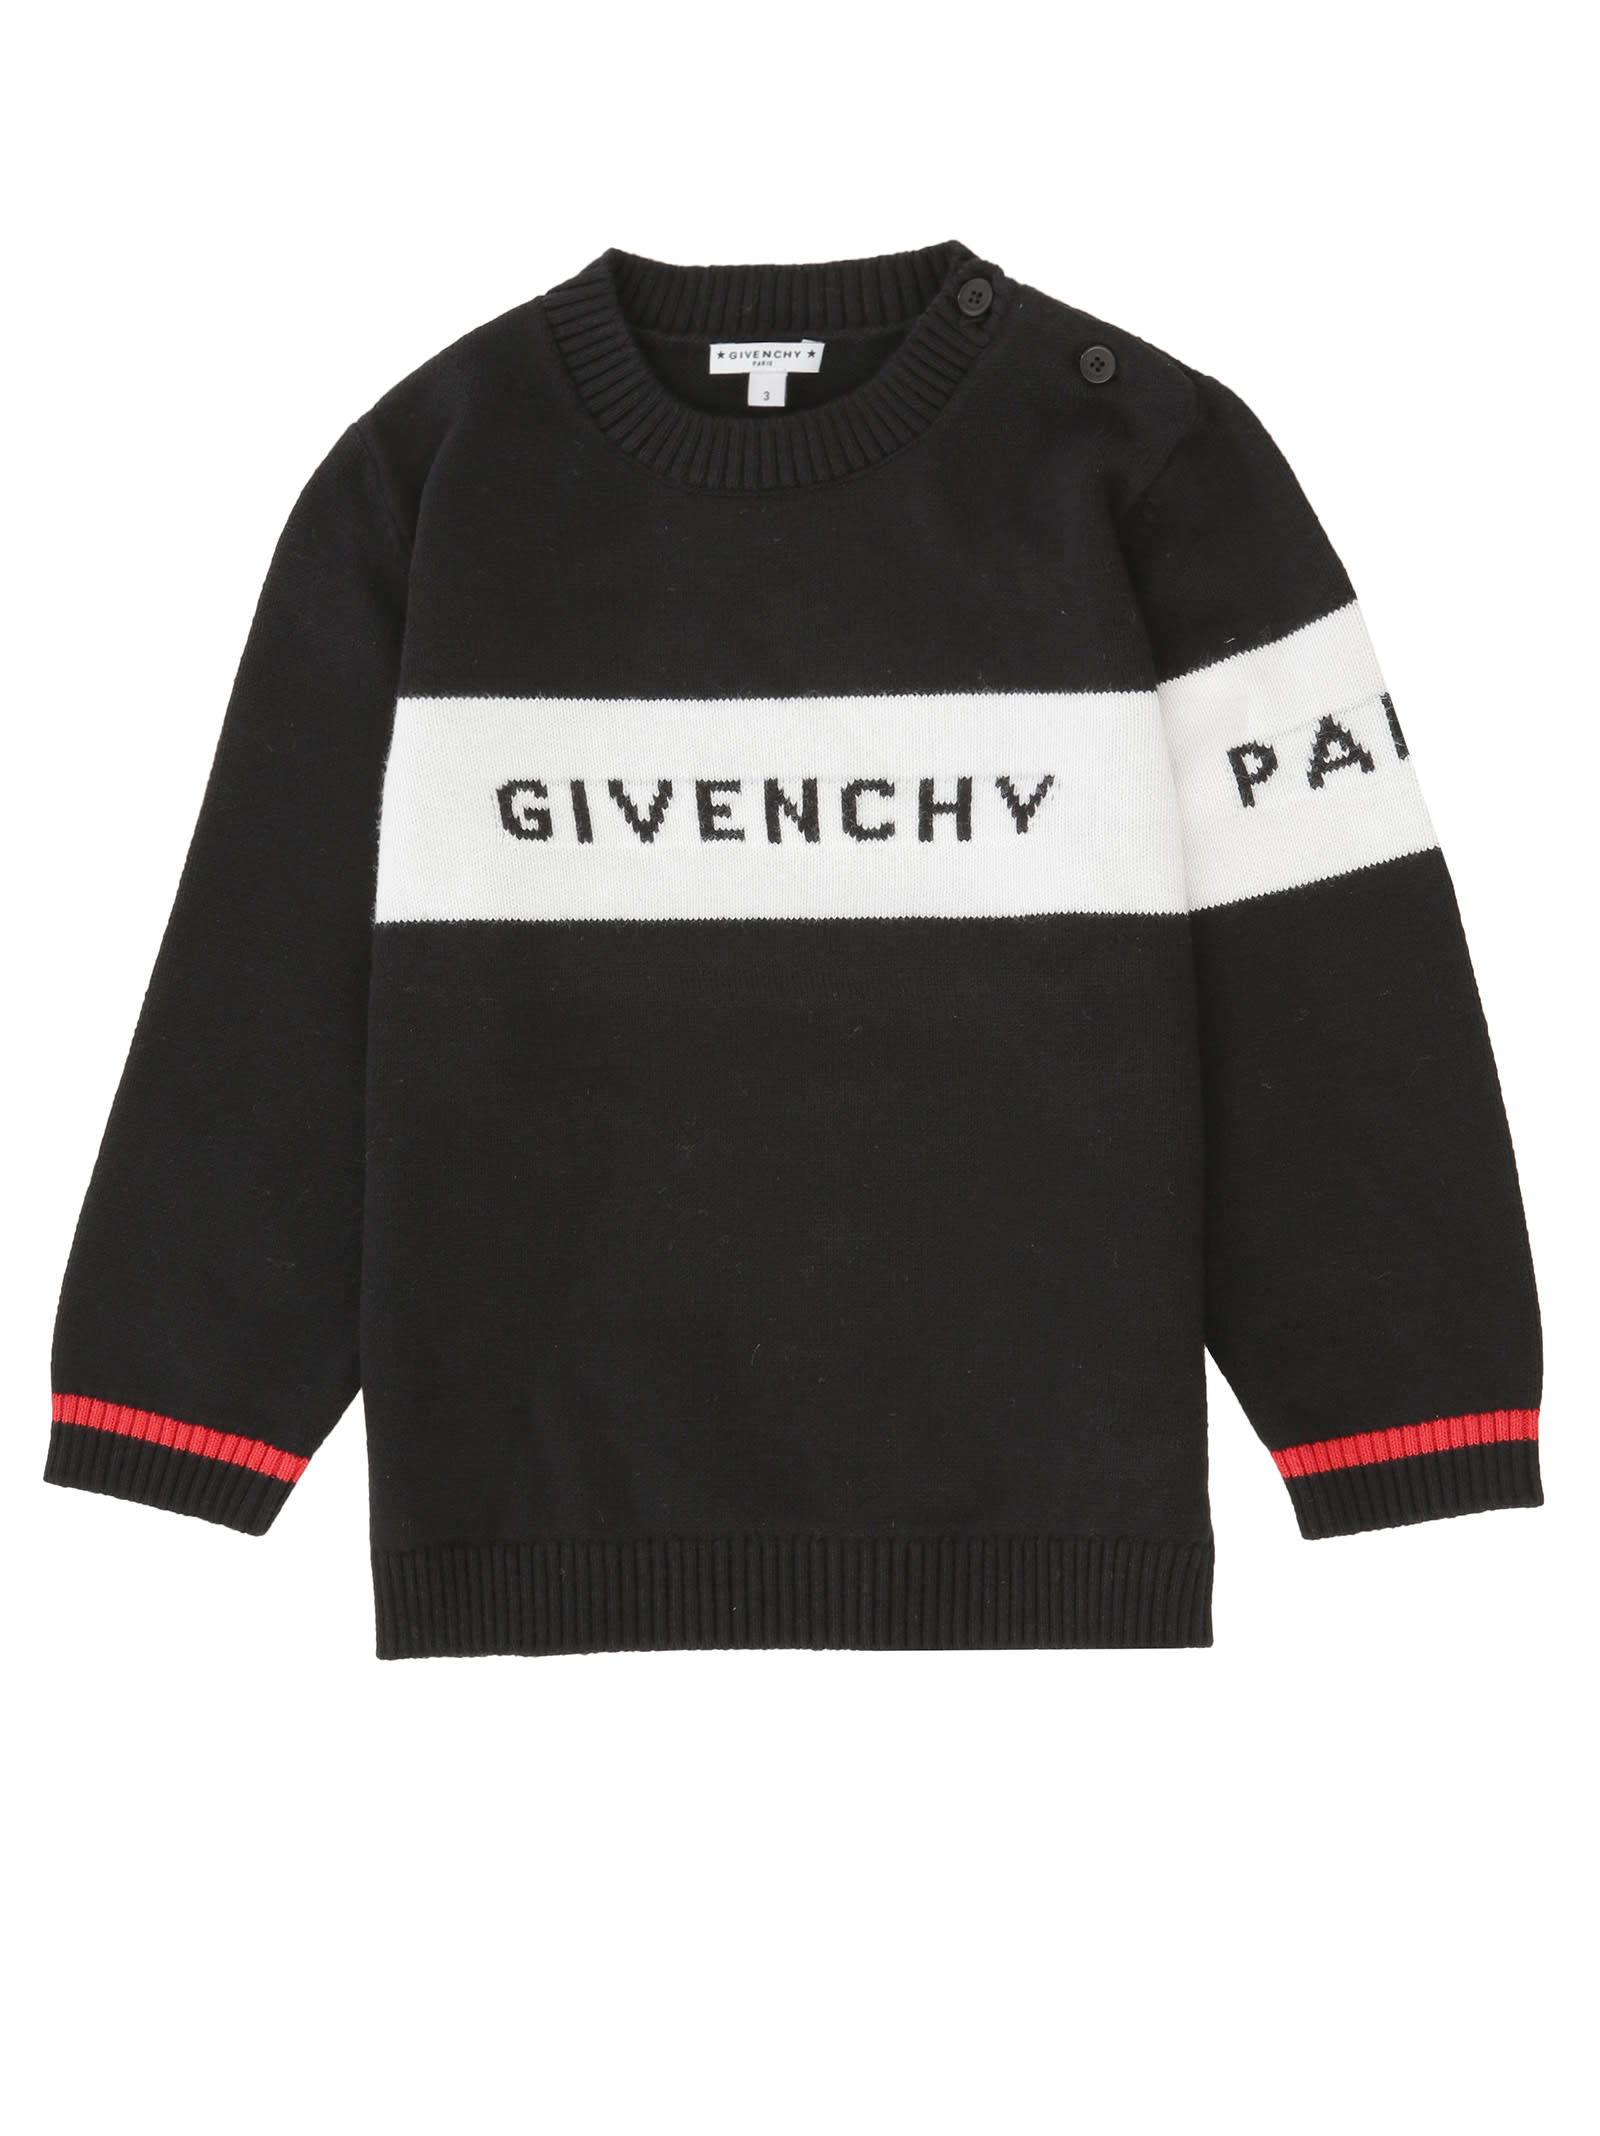 Givenchy T Shirt Size Chart